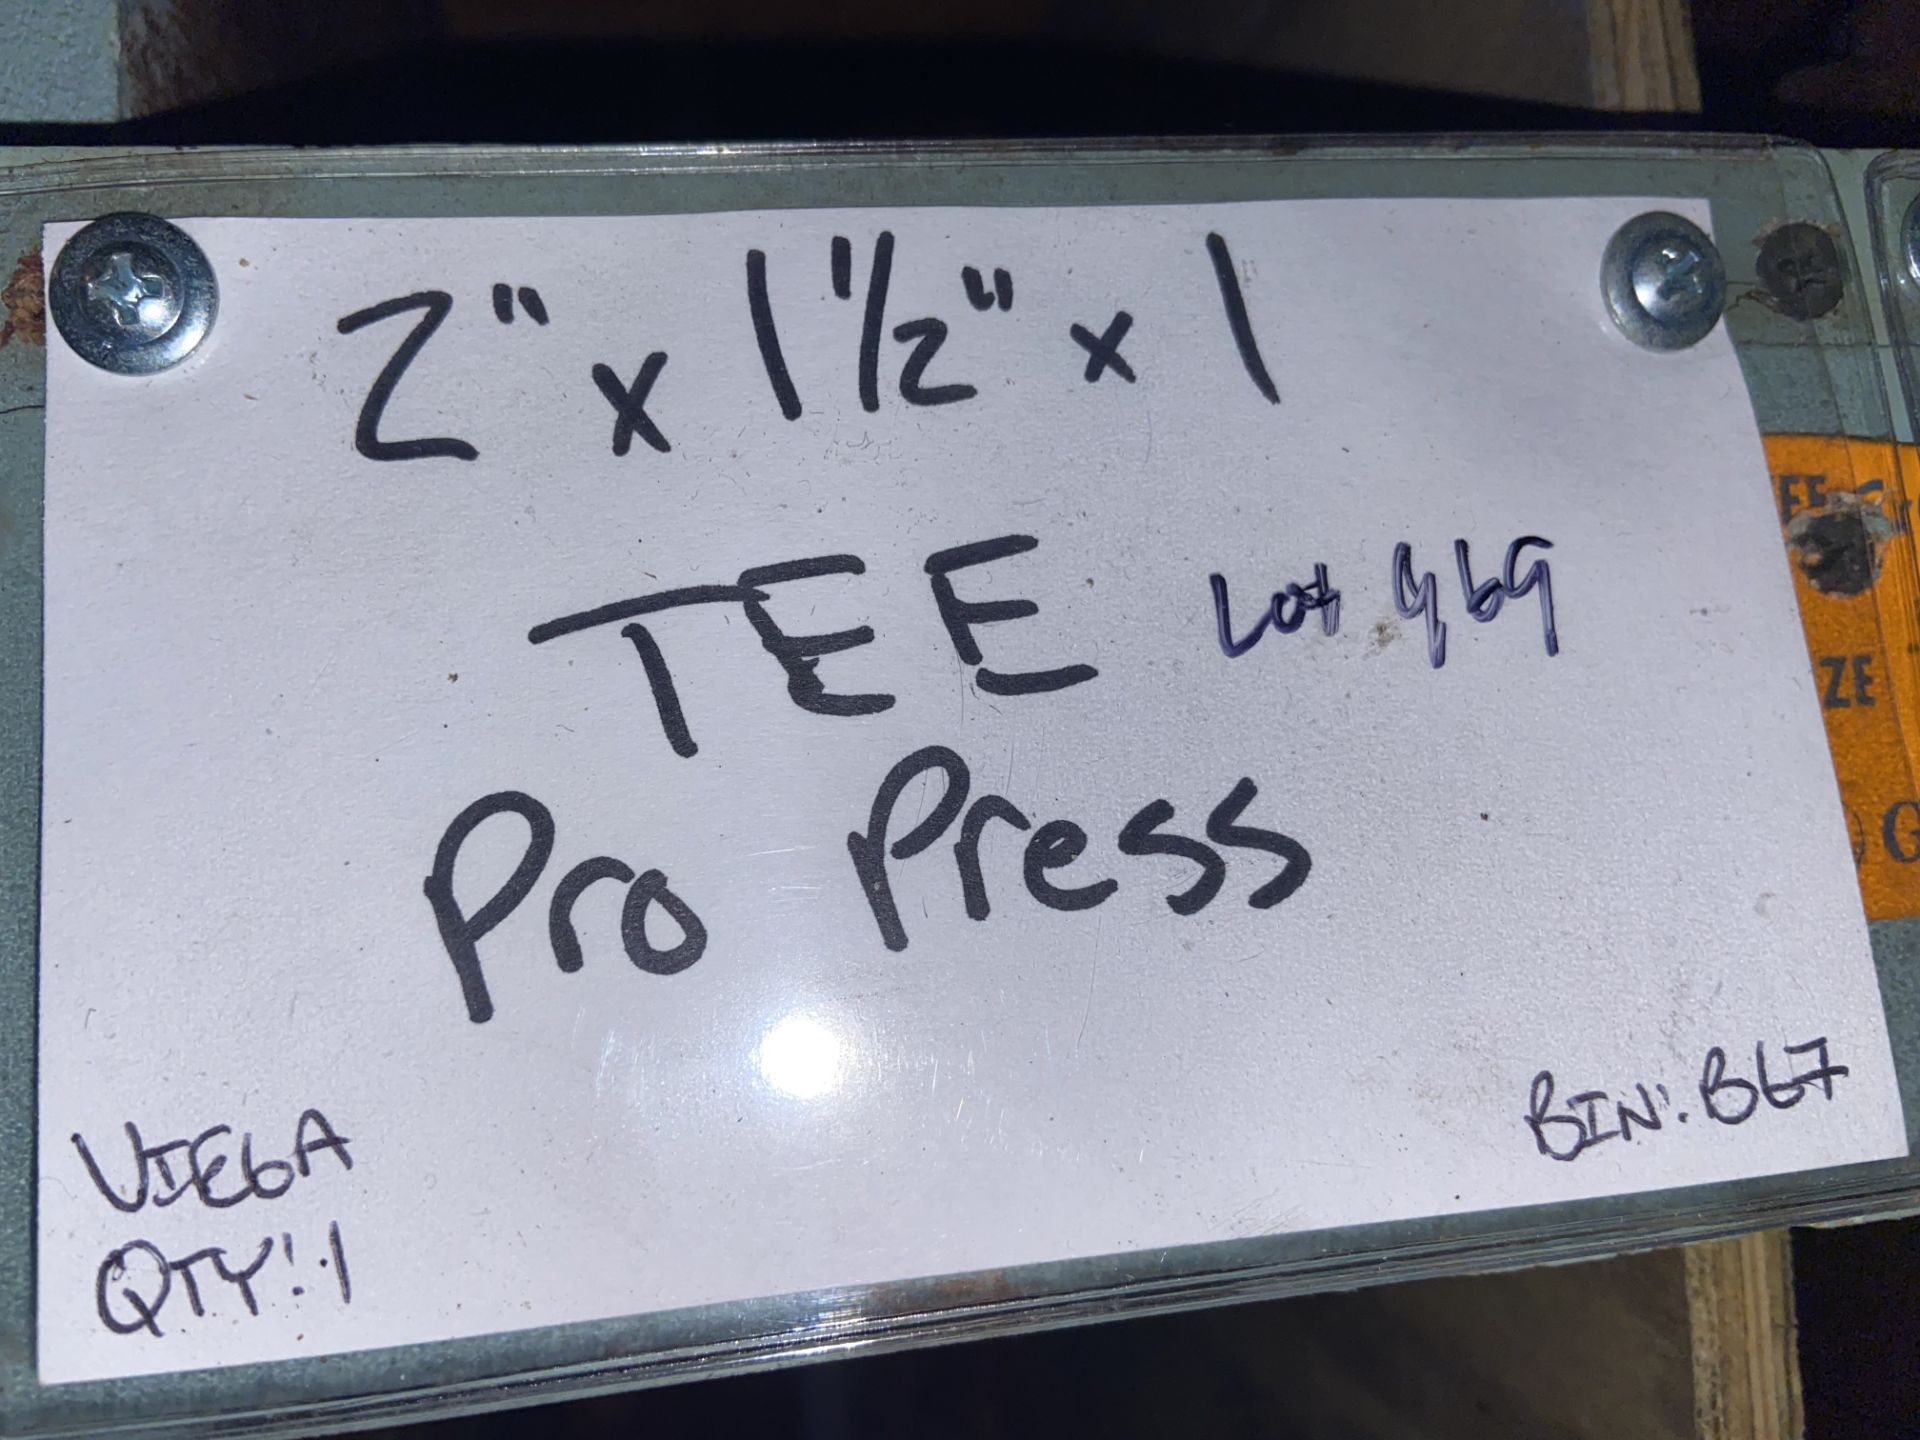 (1) VIEGA 2”x1 1/2” x 1 1/4” Tee Pro Press; (2) NIBCO 1 1/4” 1 1/4”x 1/2” Tee Pro Press; VIEGA (1) - Image 5 of 33